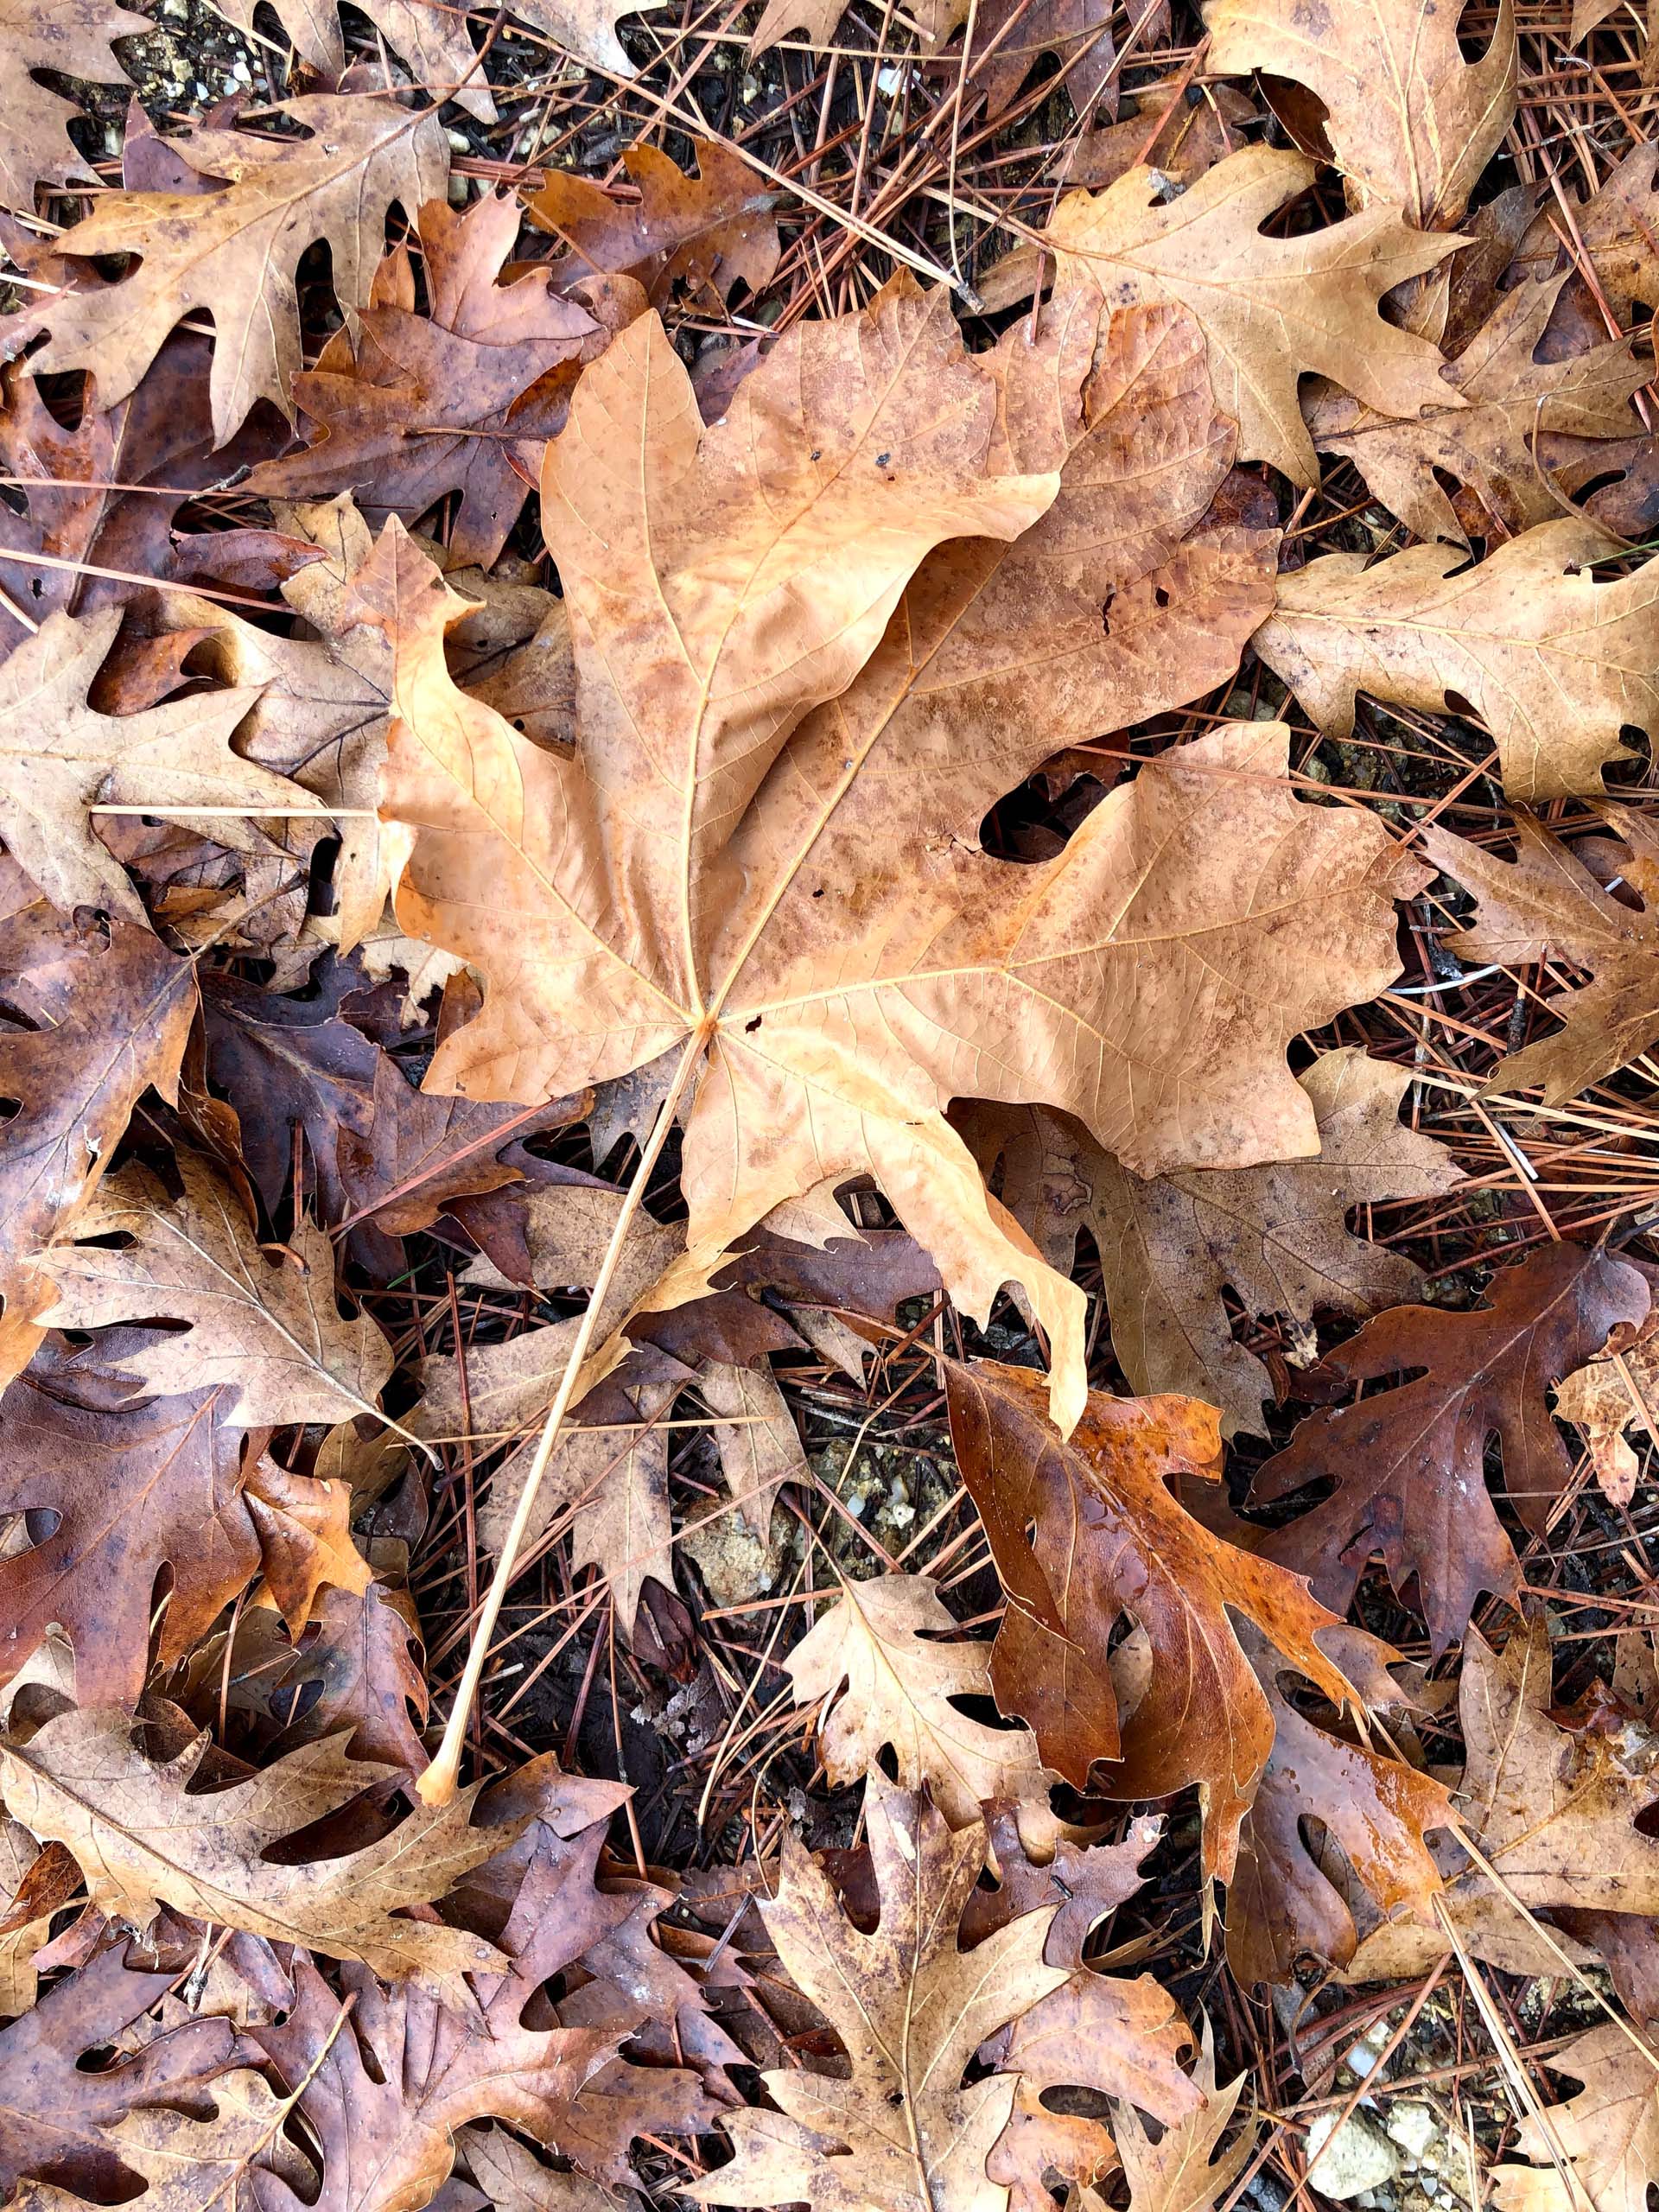 Big-leaved maple leaves, black oak leaves, and conifer needles. C. Harvey.